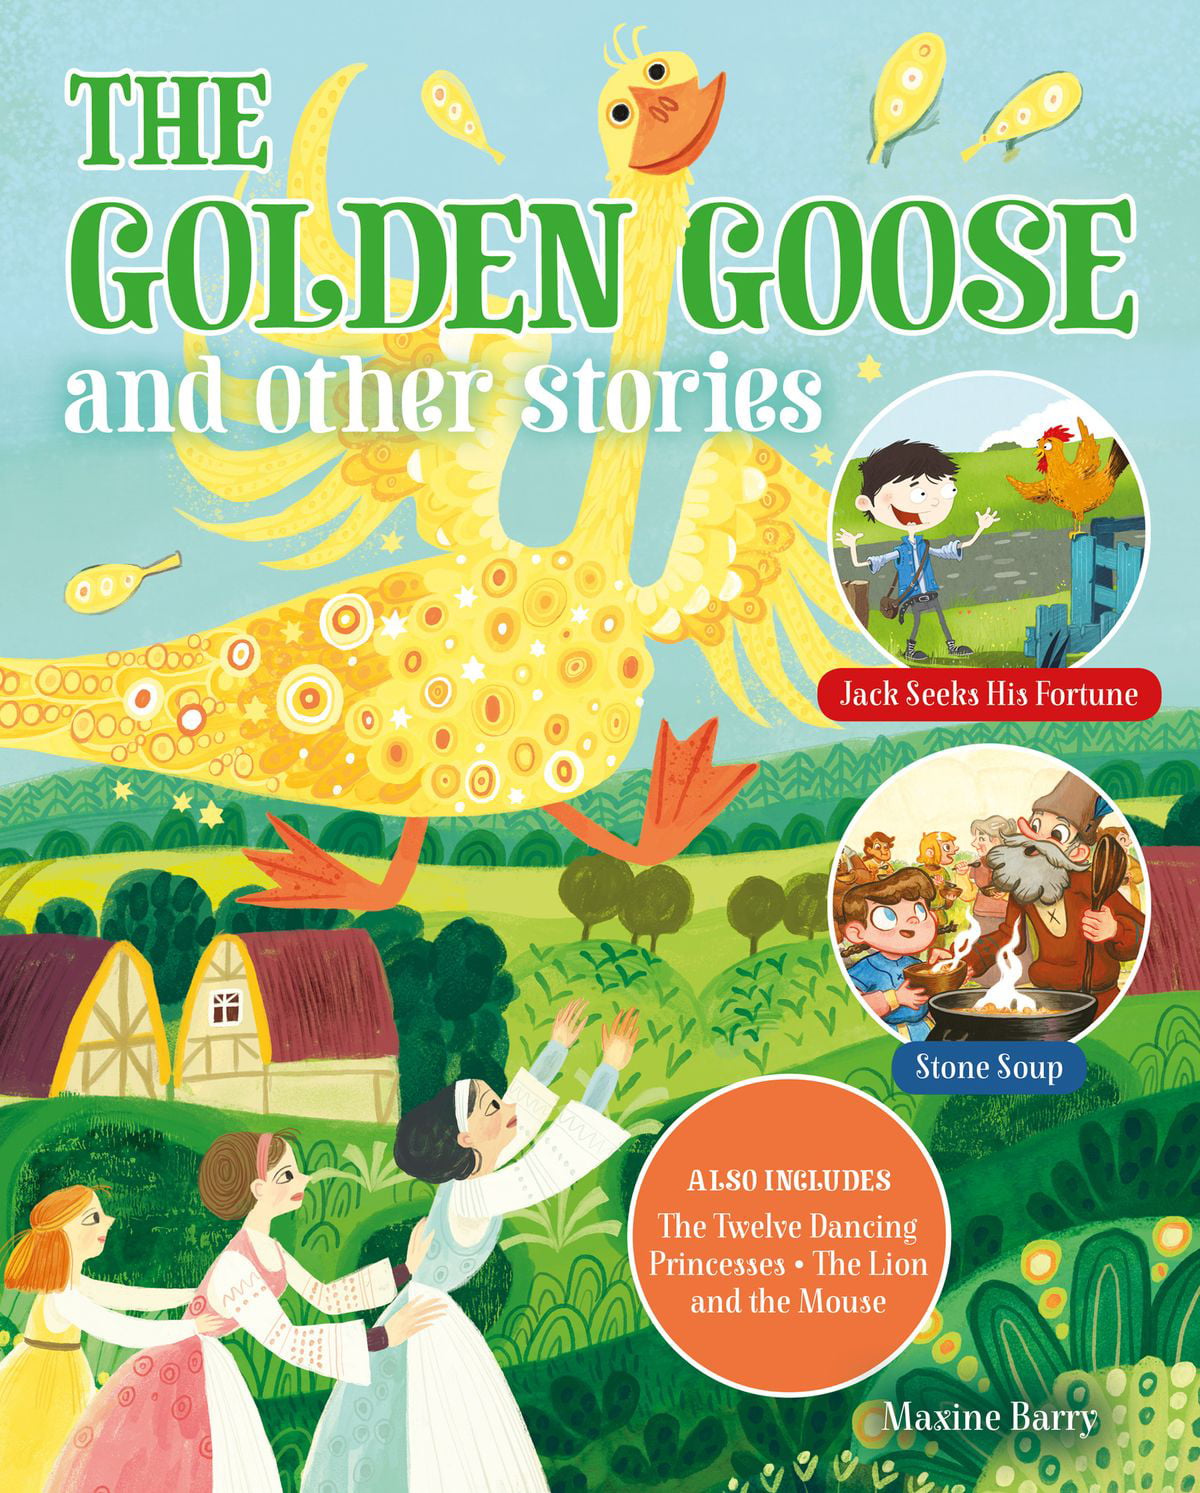 The Golden Goose and Other Stories - eBook - Walmart.com - Walmart.com